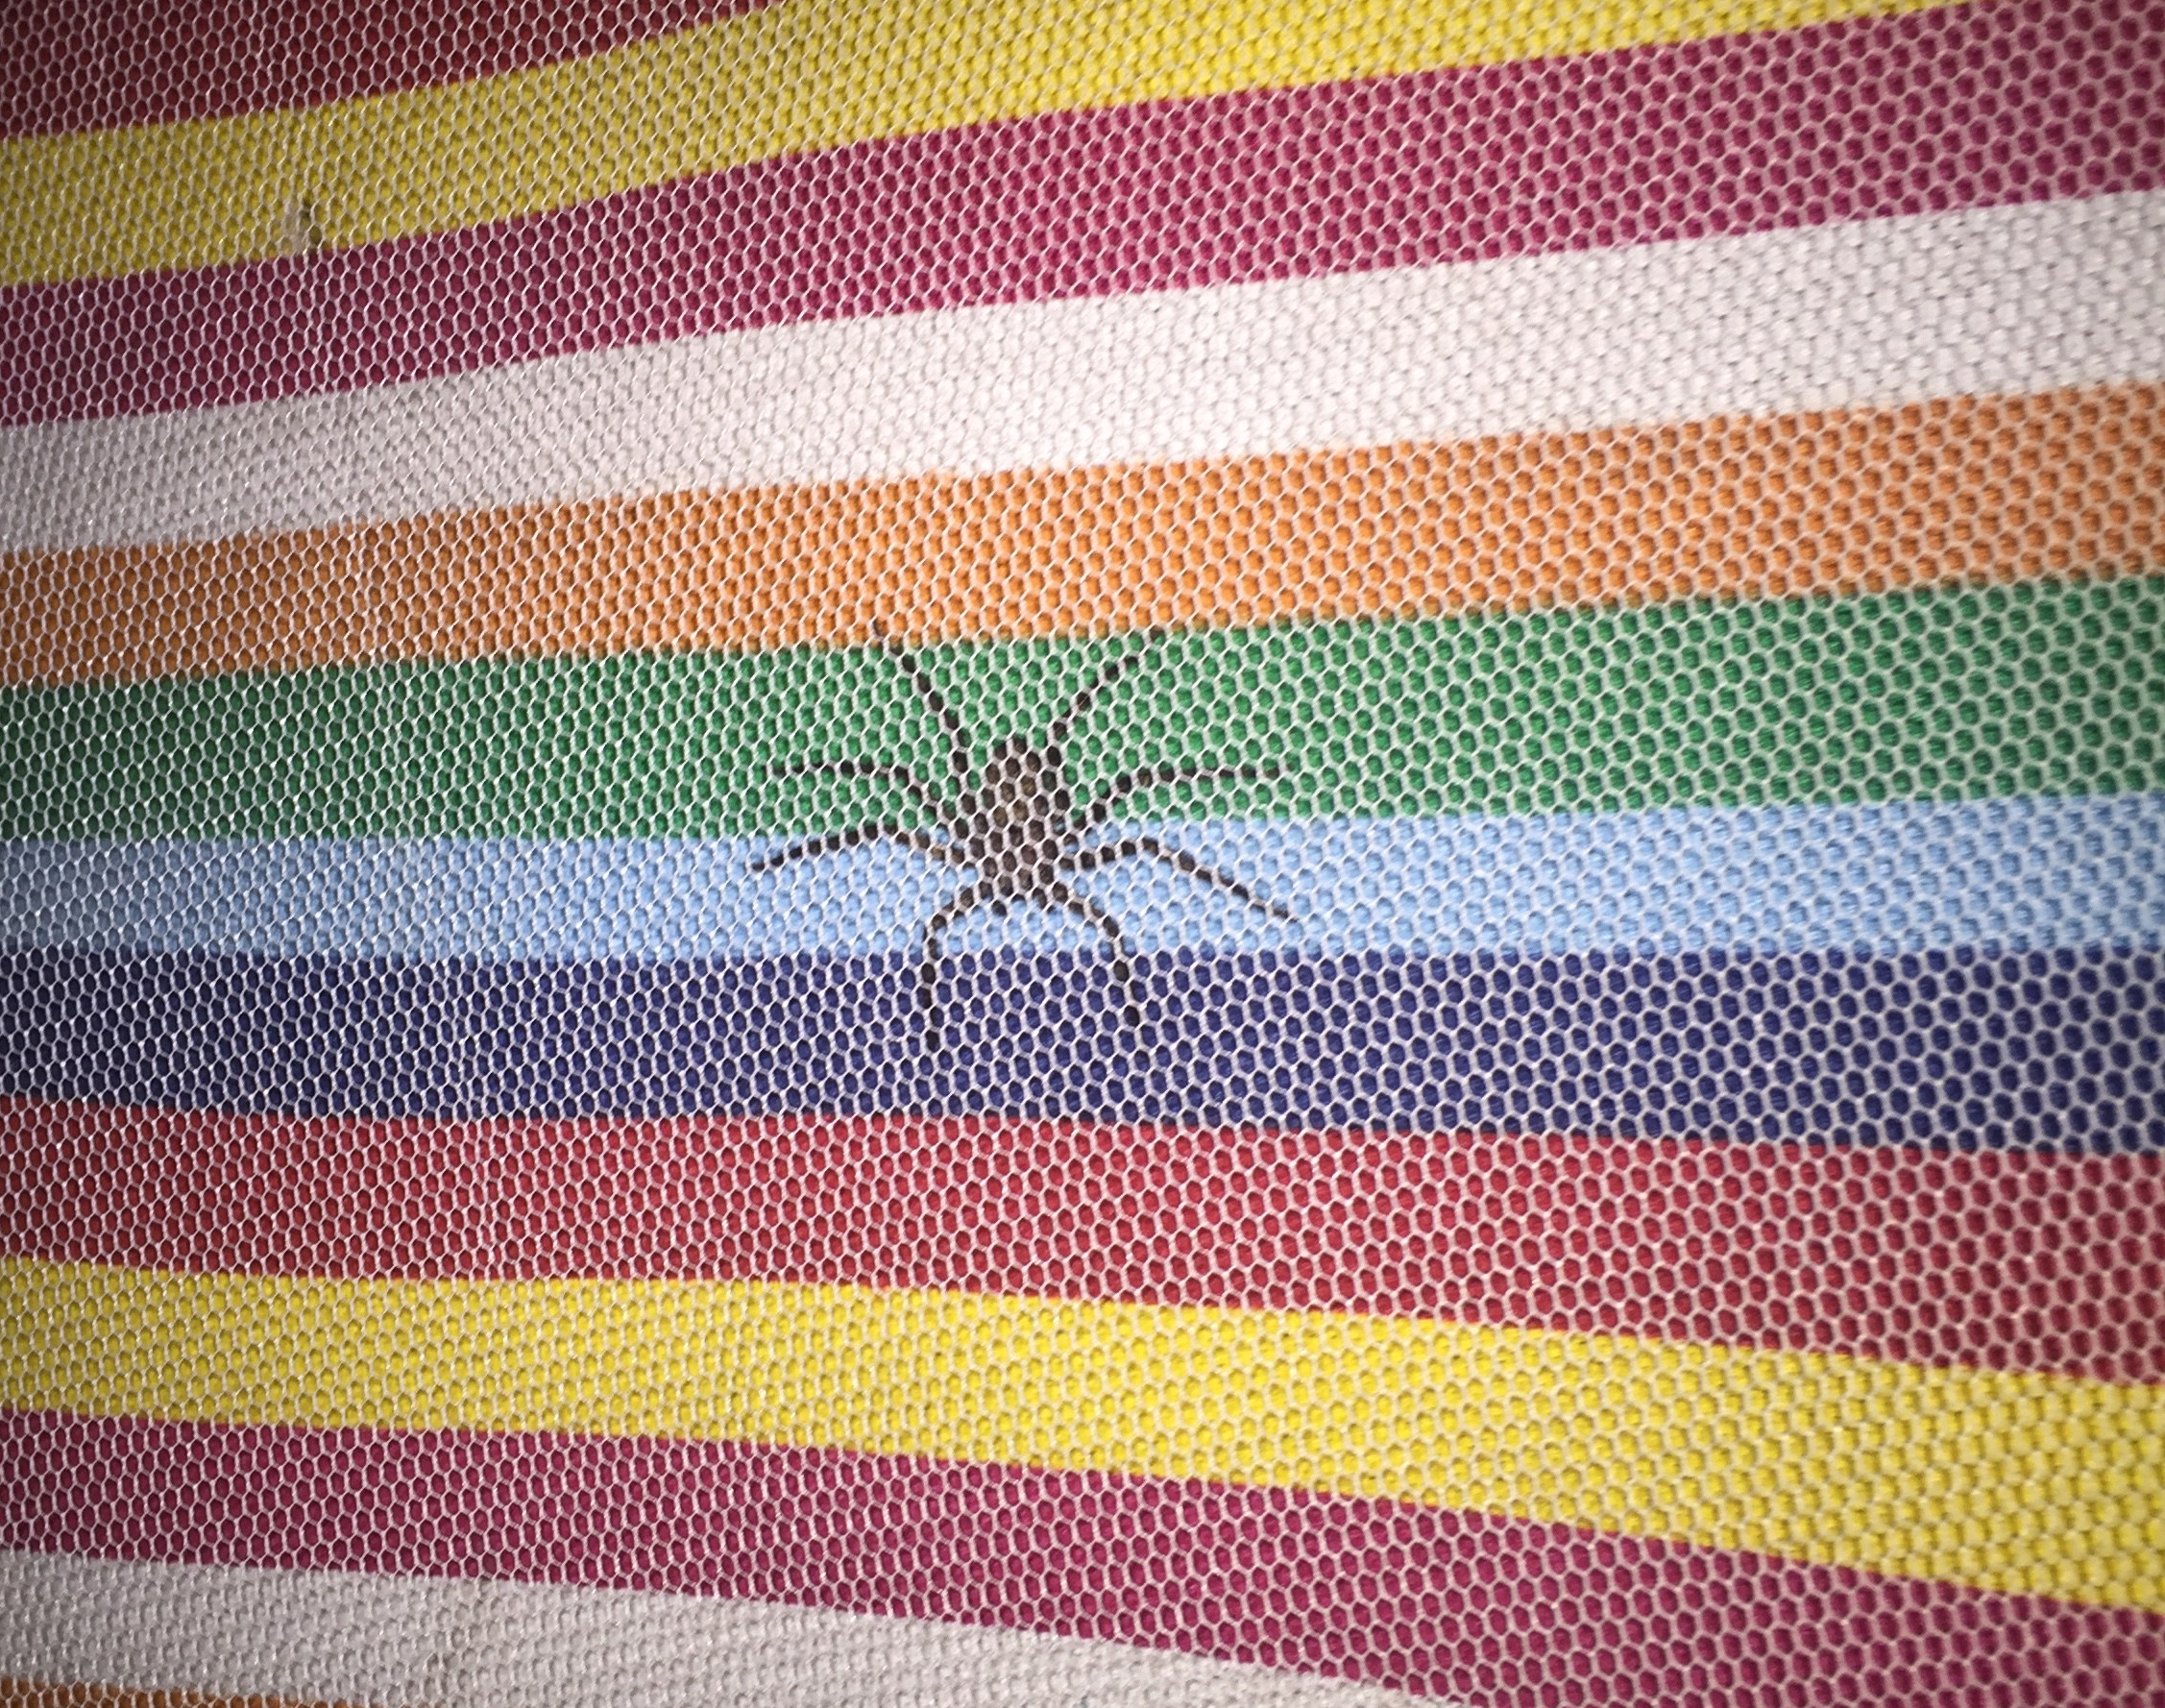 Giant spider in Cabo Polonio hostel in Uruguay